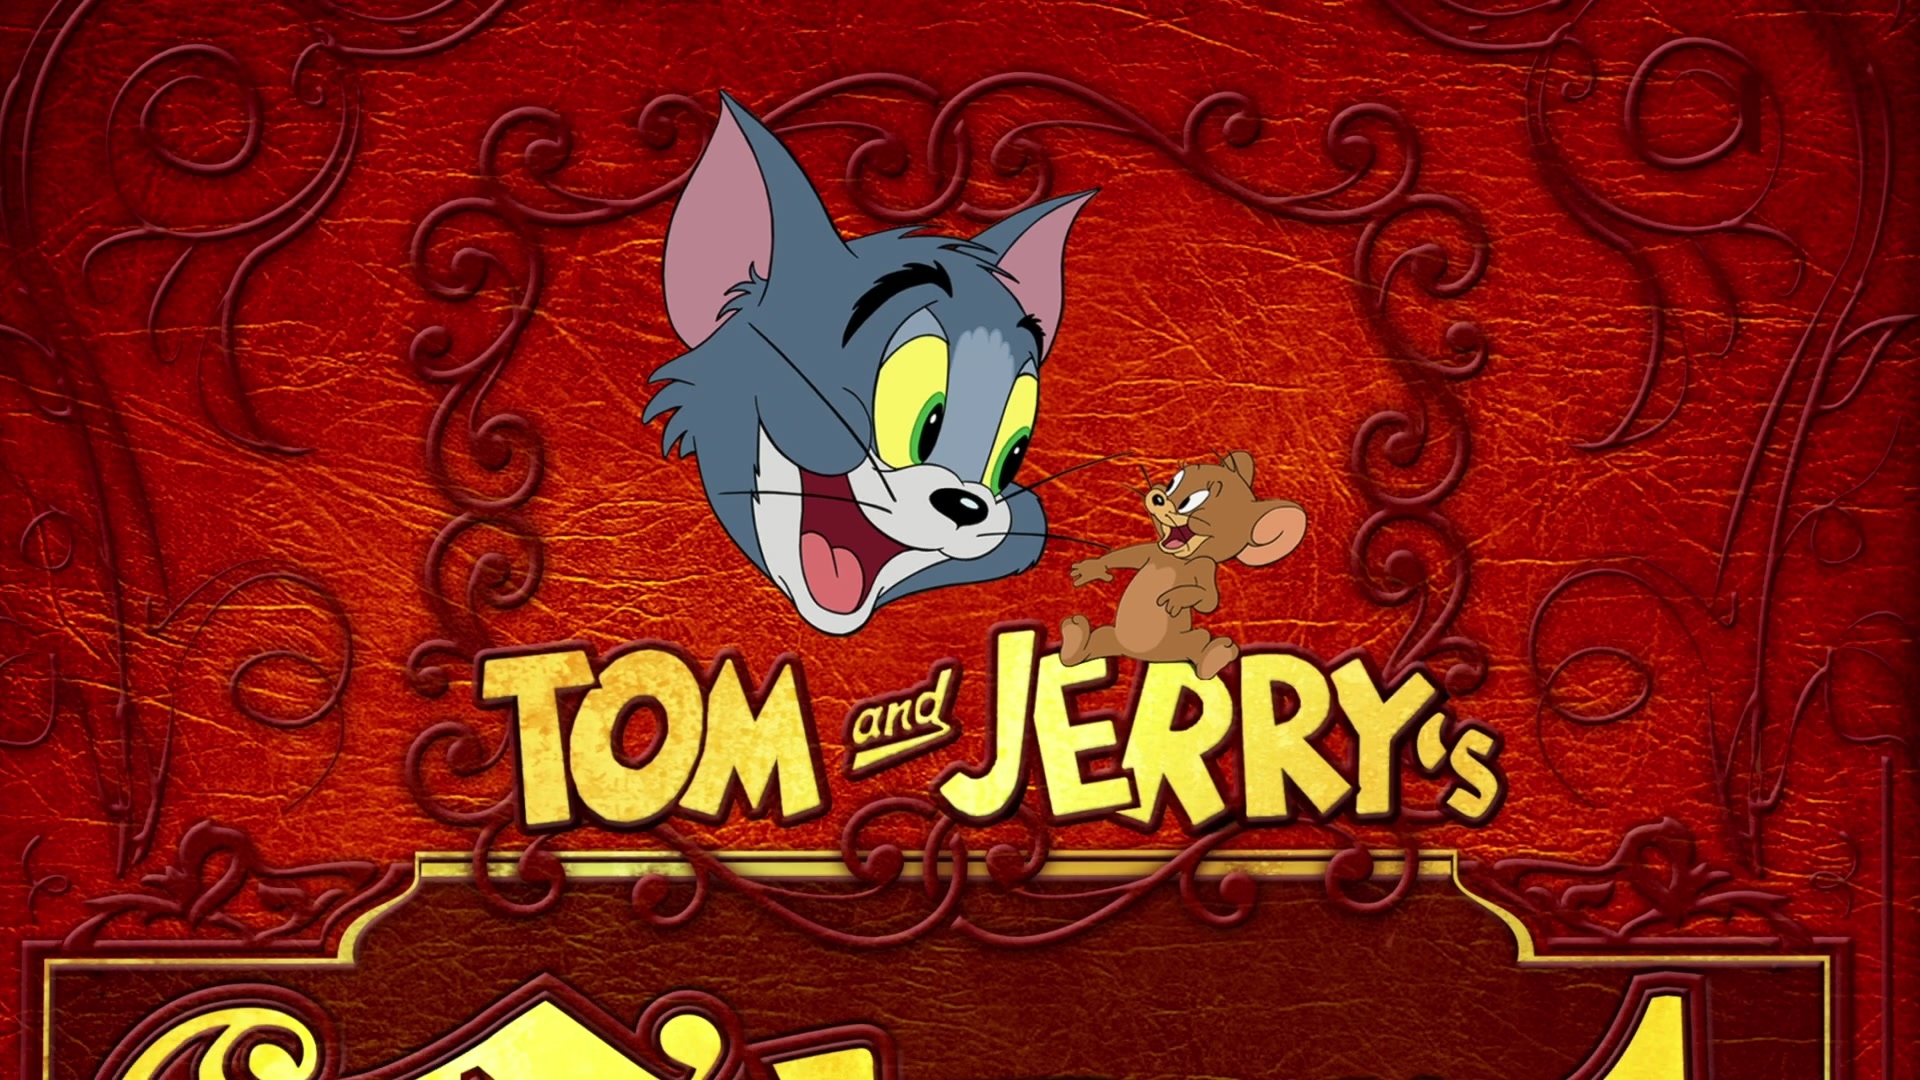 Tom i drink. Том и Джерри 2021. Том и Джерри (Tom and Jerry) 1940. Картинки Тома и Джерри.